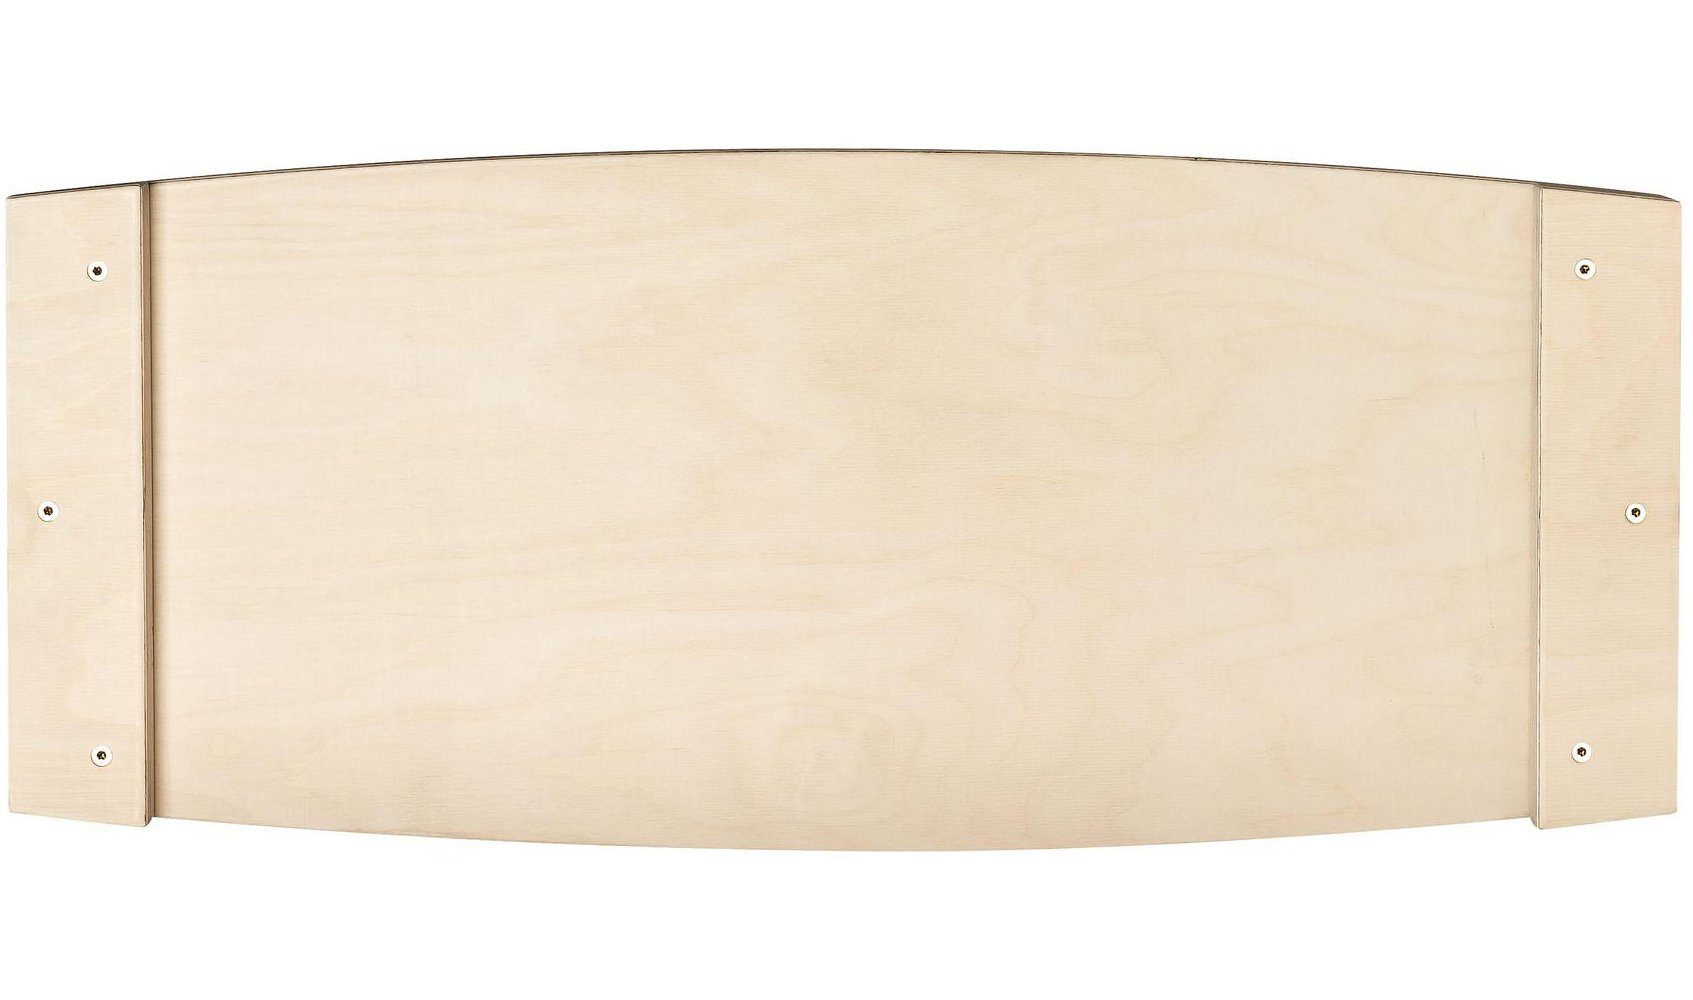 Korkpads Kork-Deko.de mit Balanceboard & Korkrolle aus (45x10cm) Birkenholz als Rutschschutz